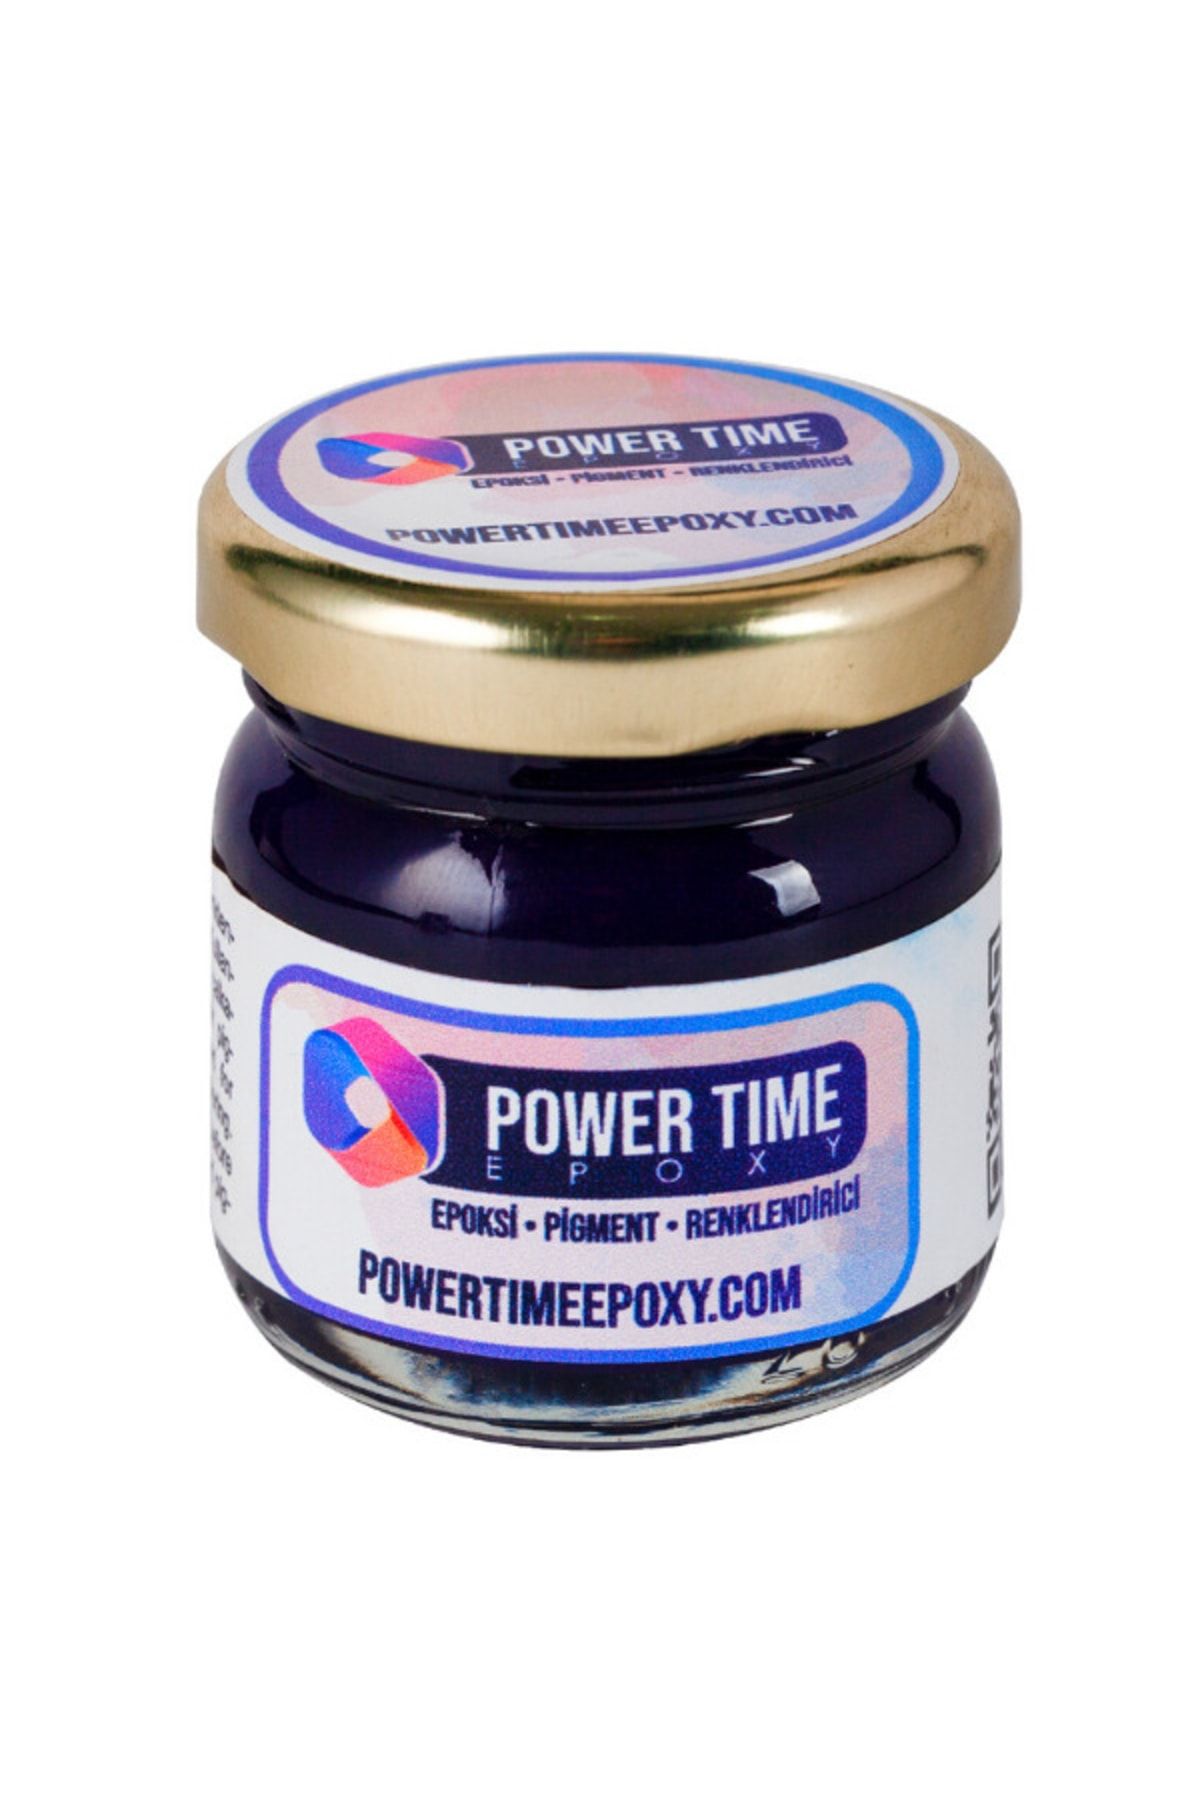 POWER TIME EPOXY Opak & Transparan Sıvı Pigment Boya / Parliament Mavi / Epoksi Için